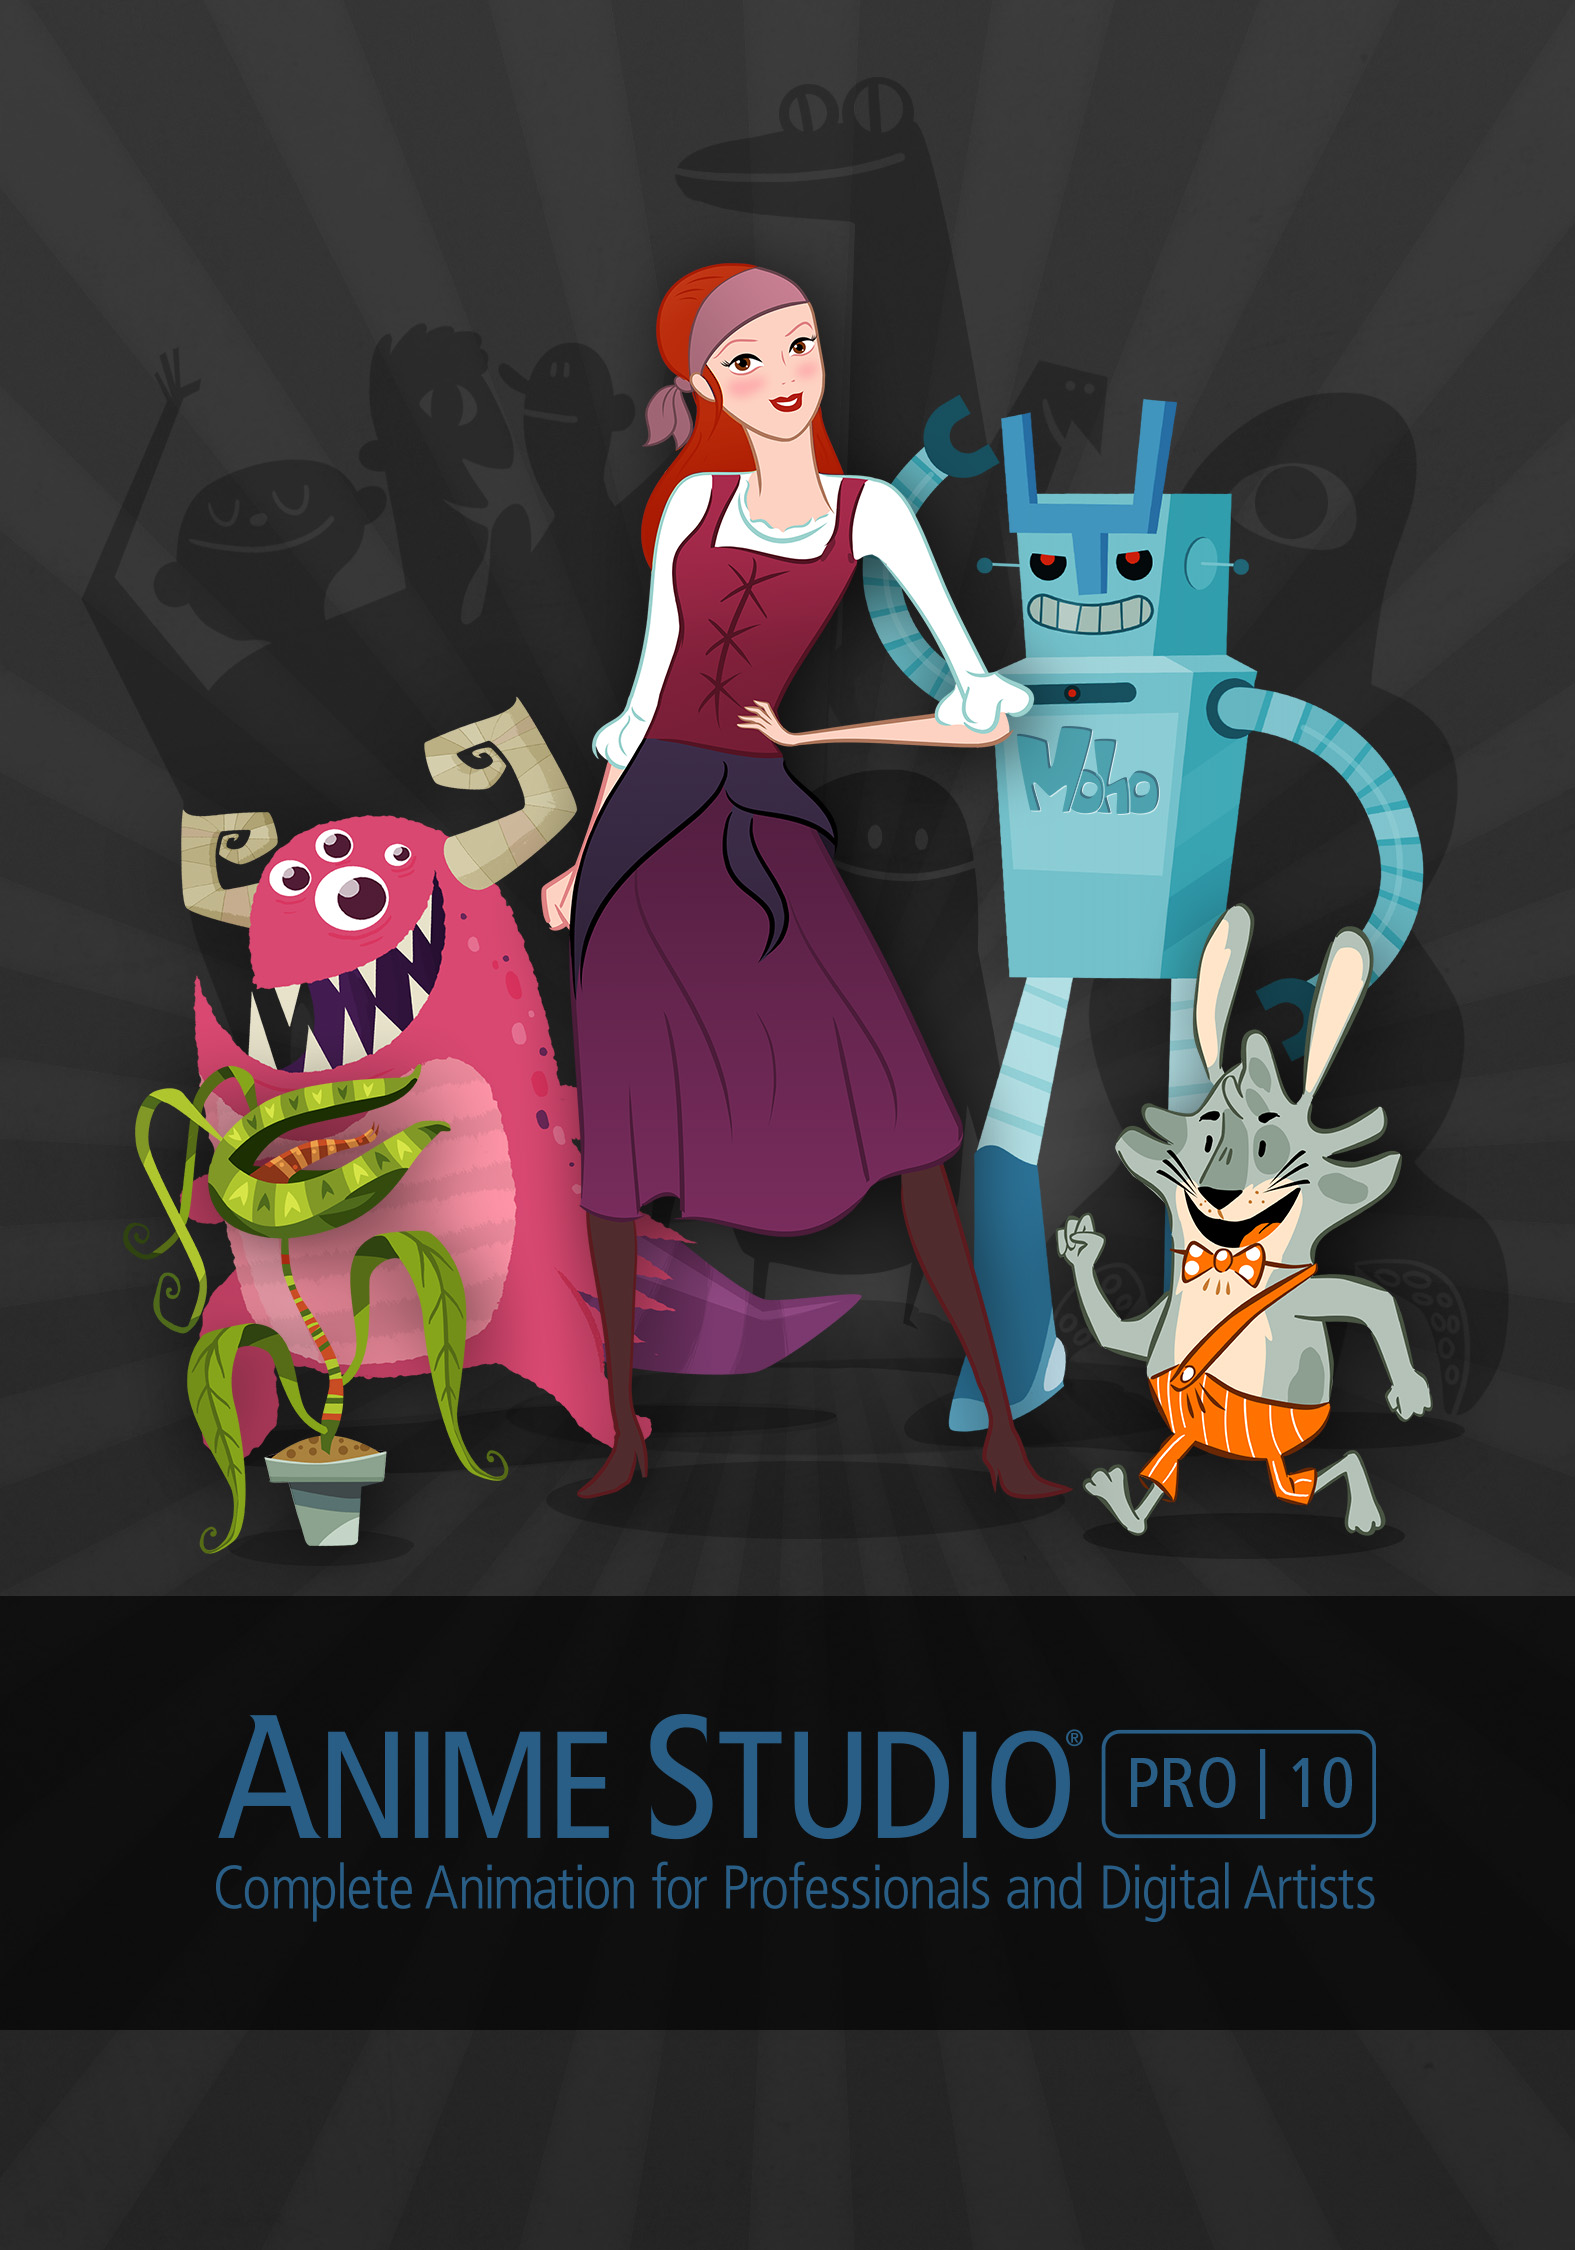 Smith Micro announces new Anime Studio 10 for Mac and Windows